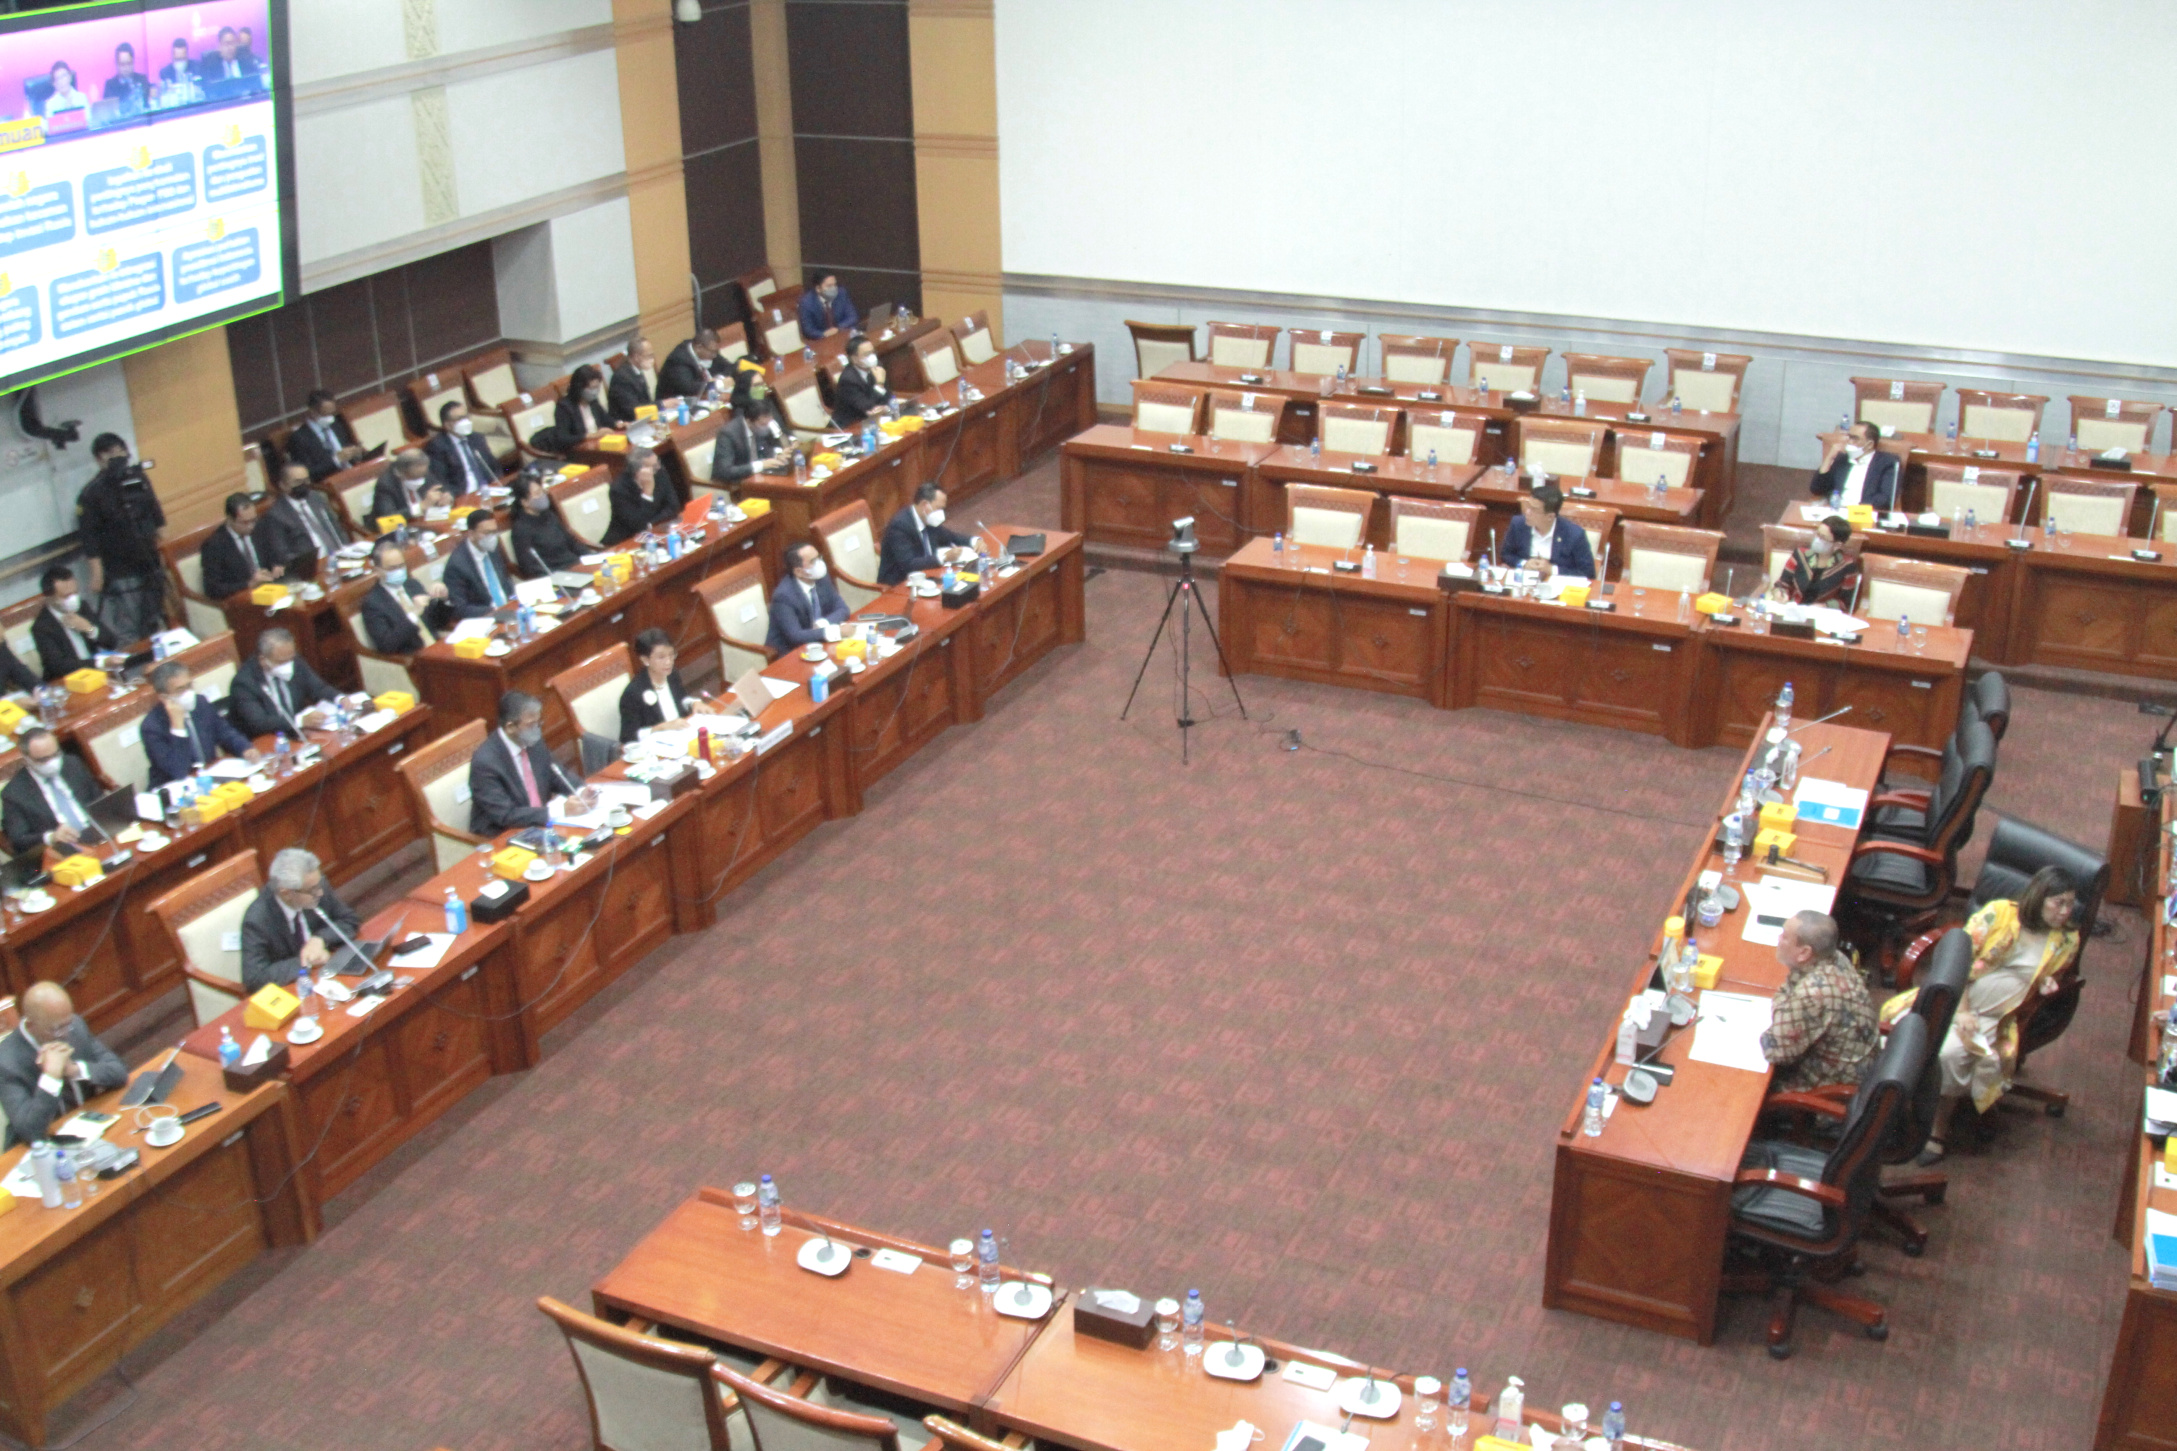 Menteri Luar Negeri Retno Marsudi Rapat kerja bersama Komisi I DPR RI (Ashar/SinPo.id)